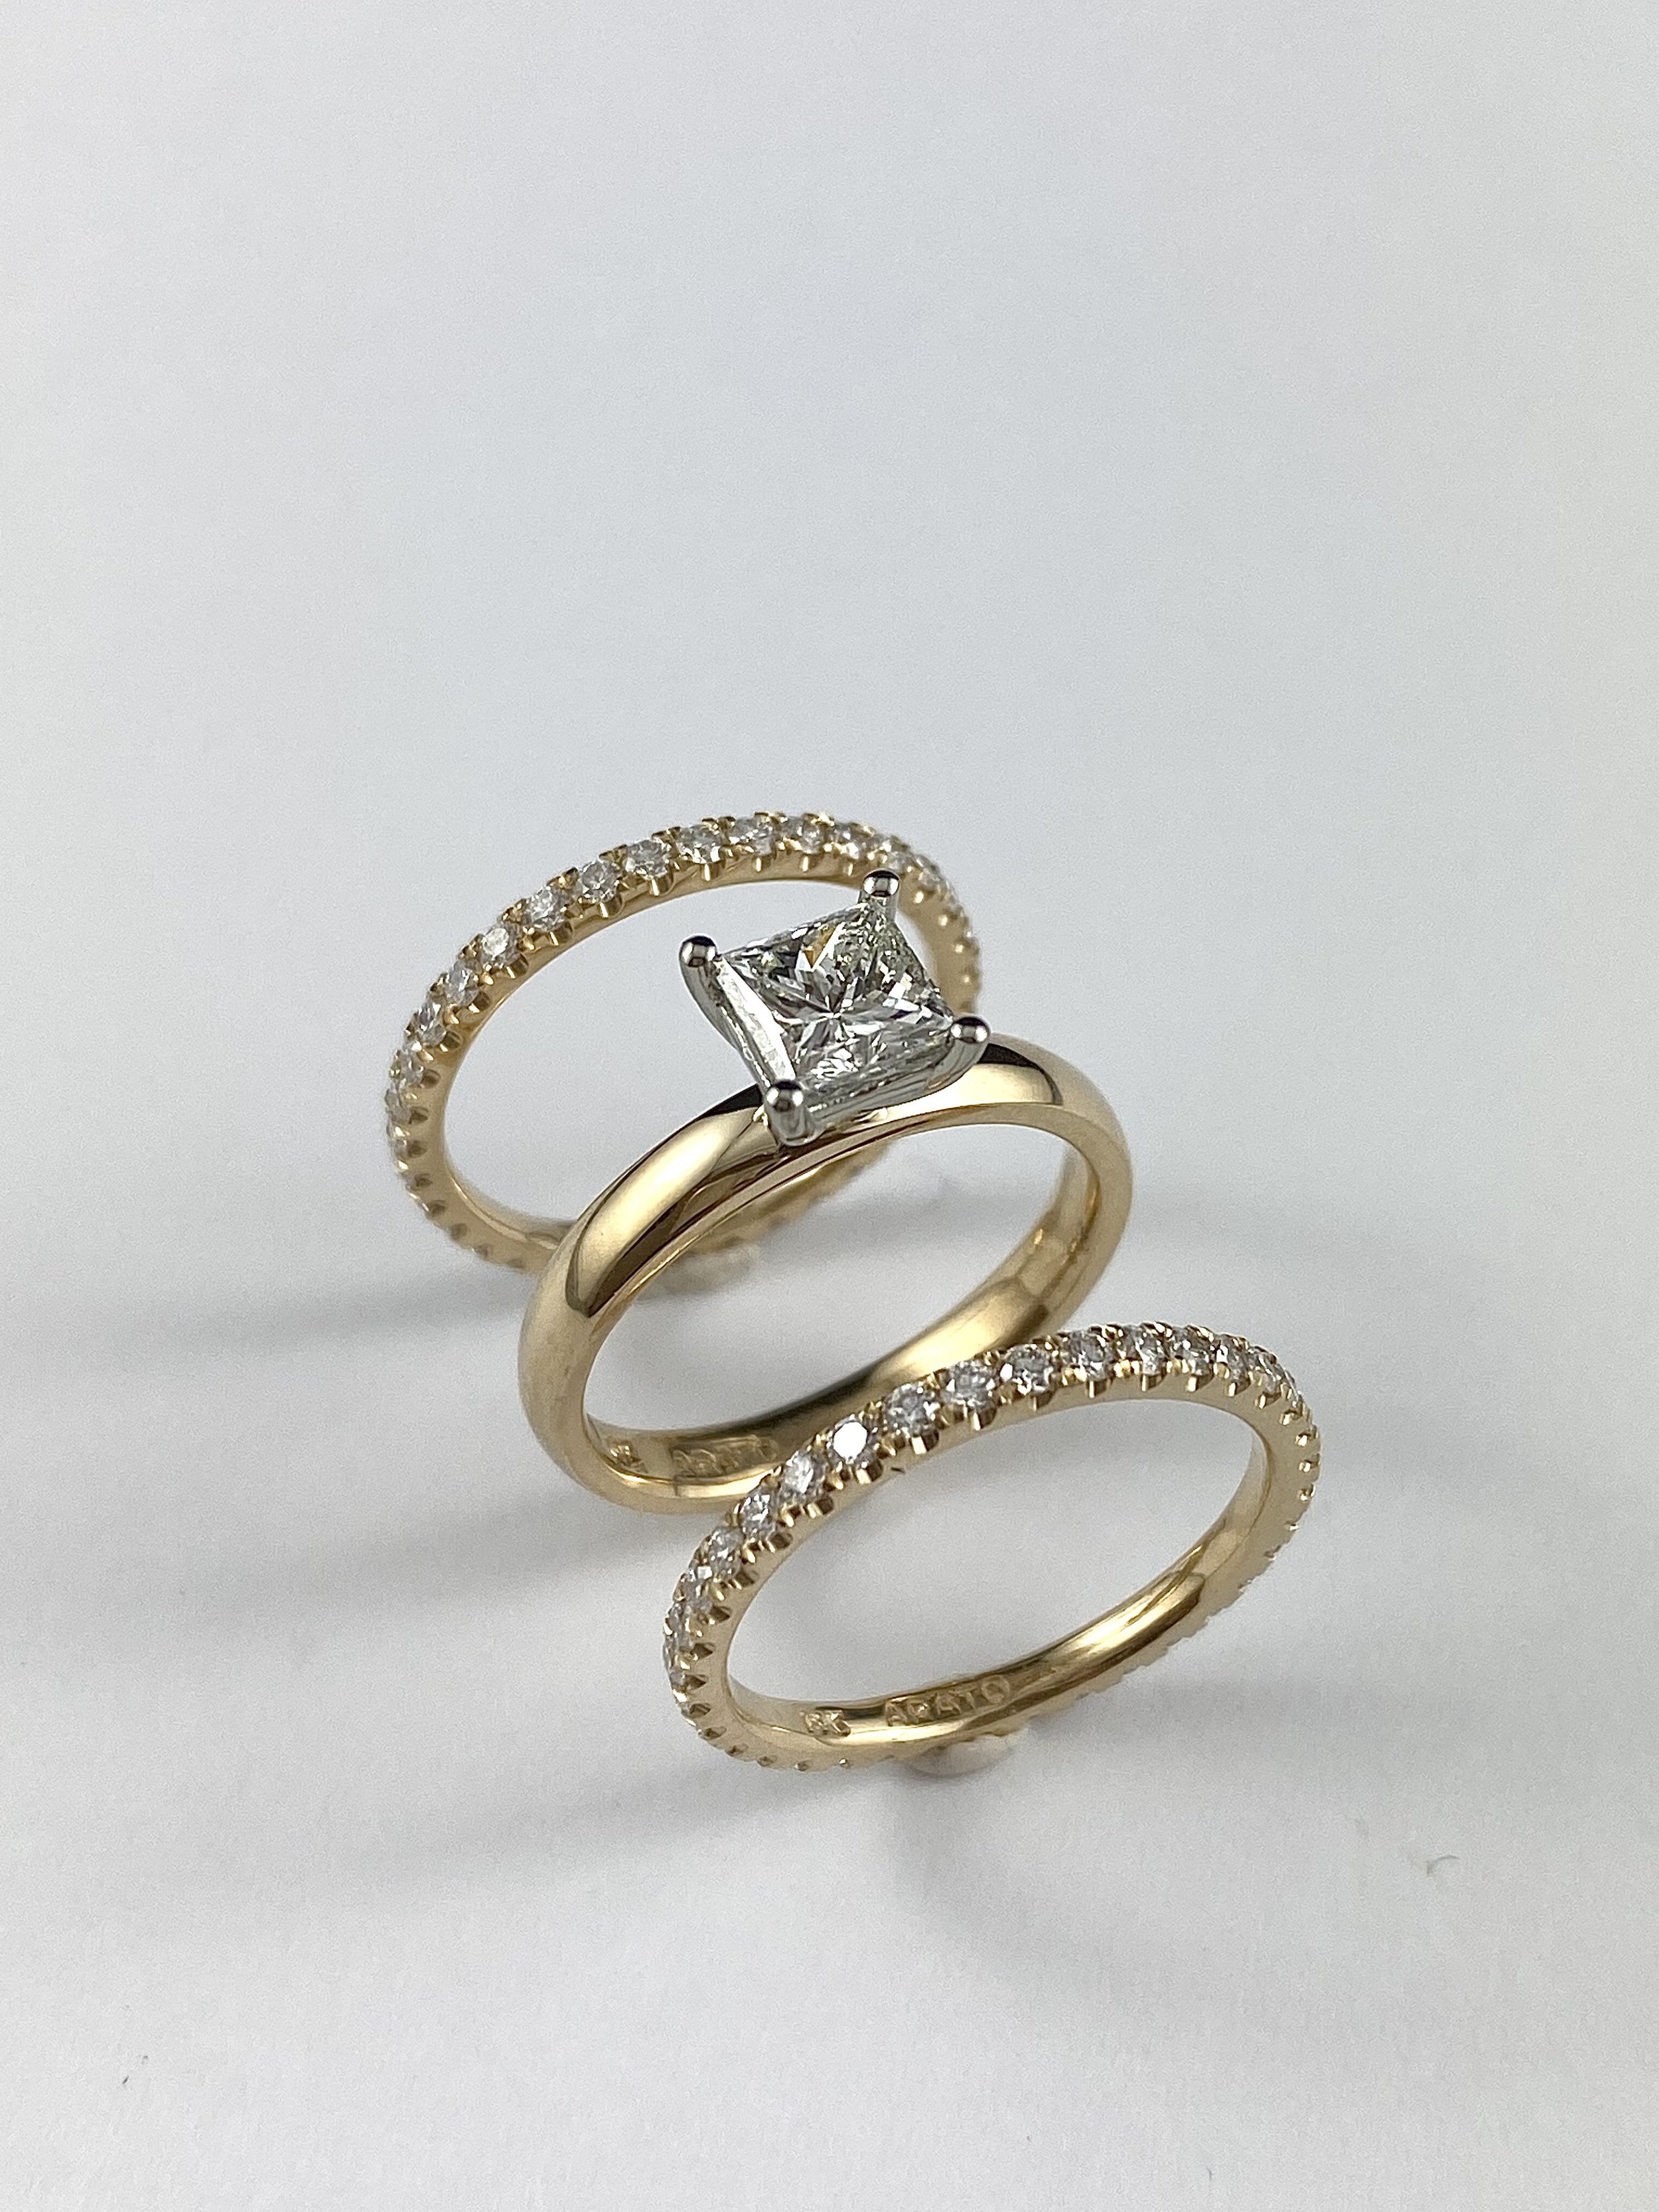 19K White and Yellow Gold Princess Cut Diamond Ring with 18K Yellow Gold Diamond Eternity Bands